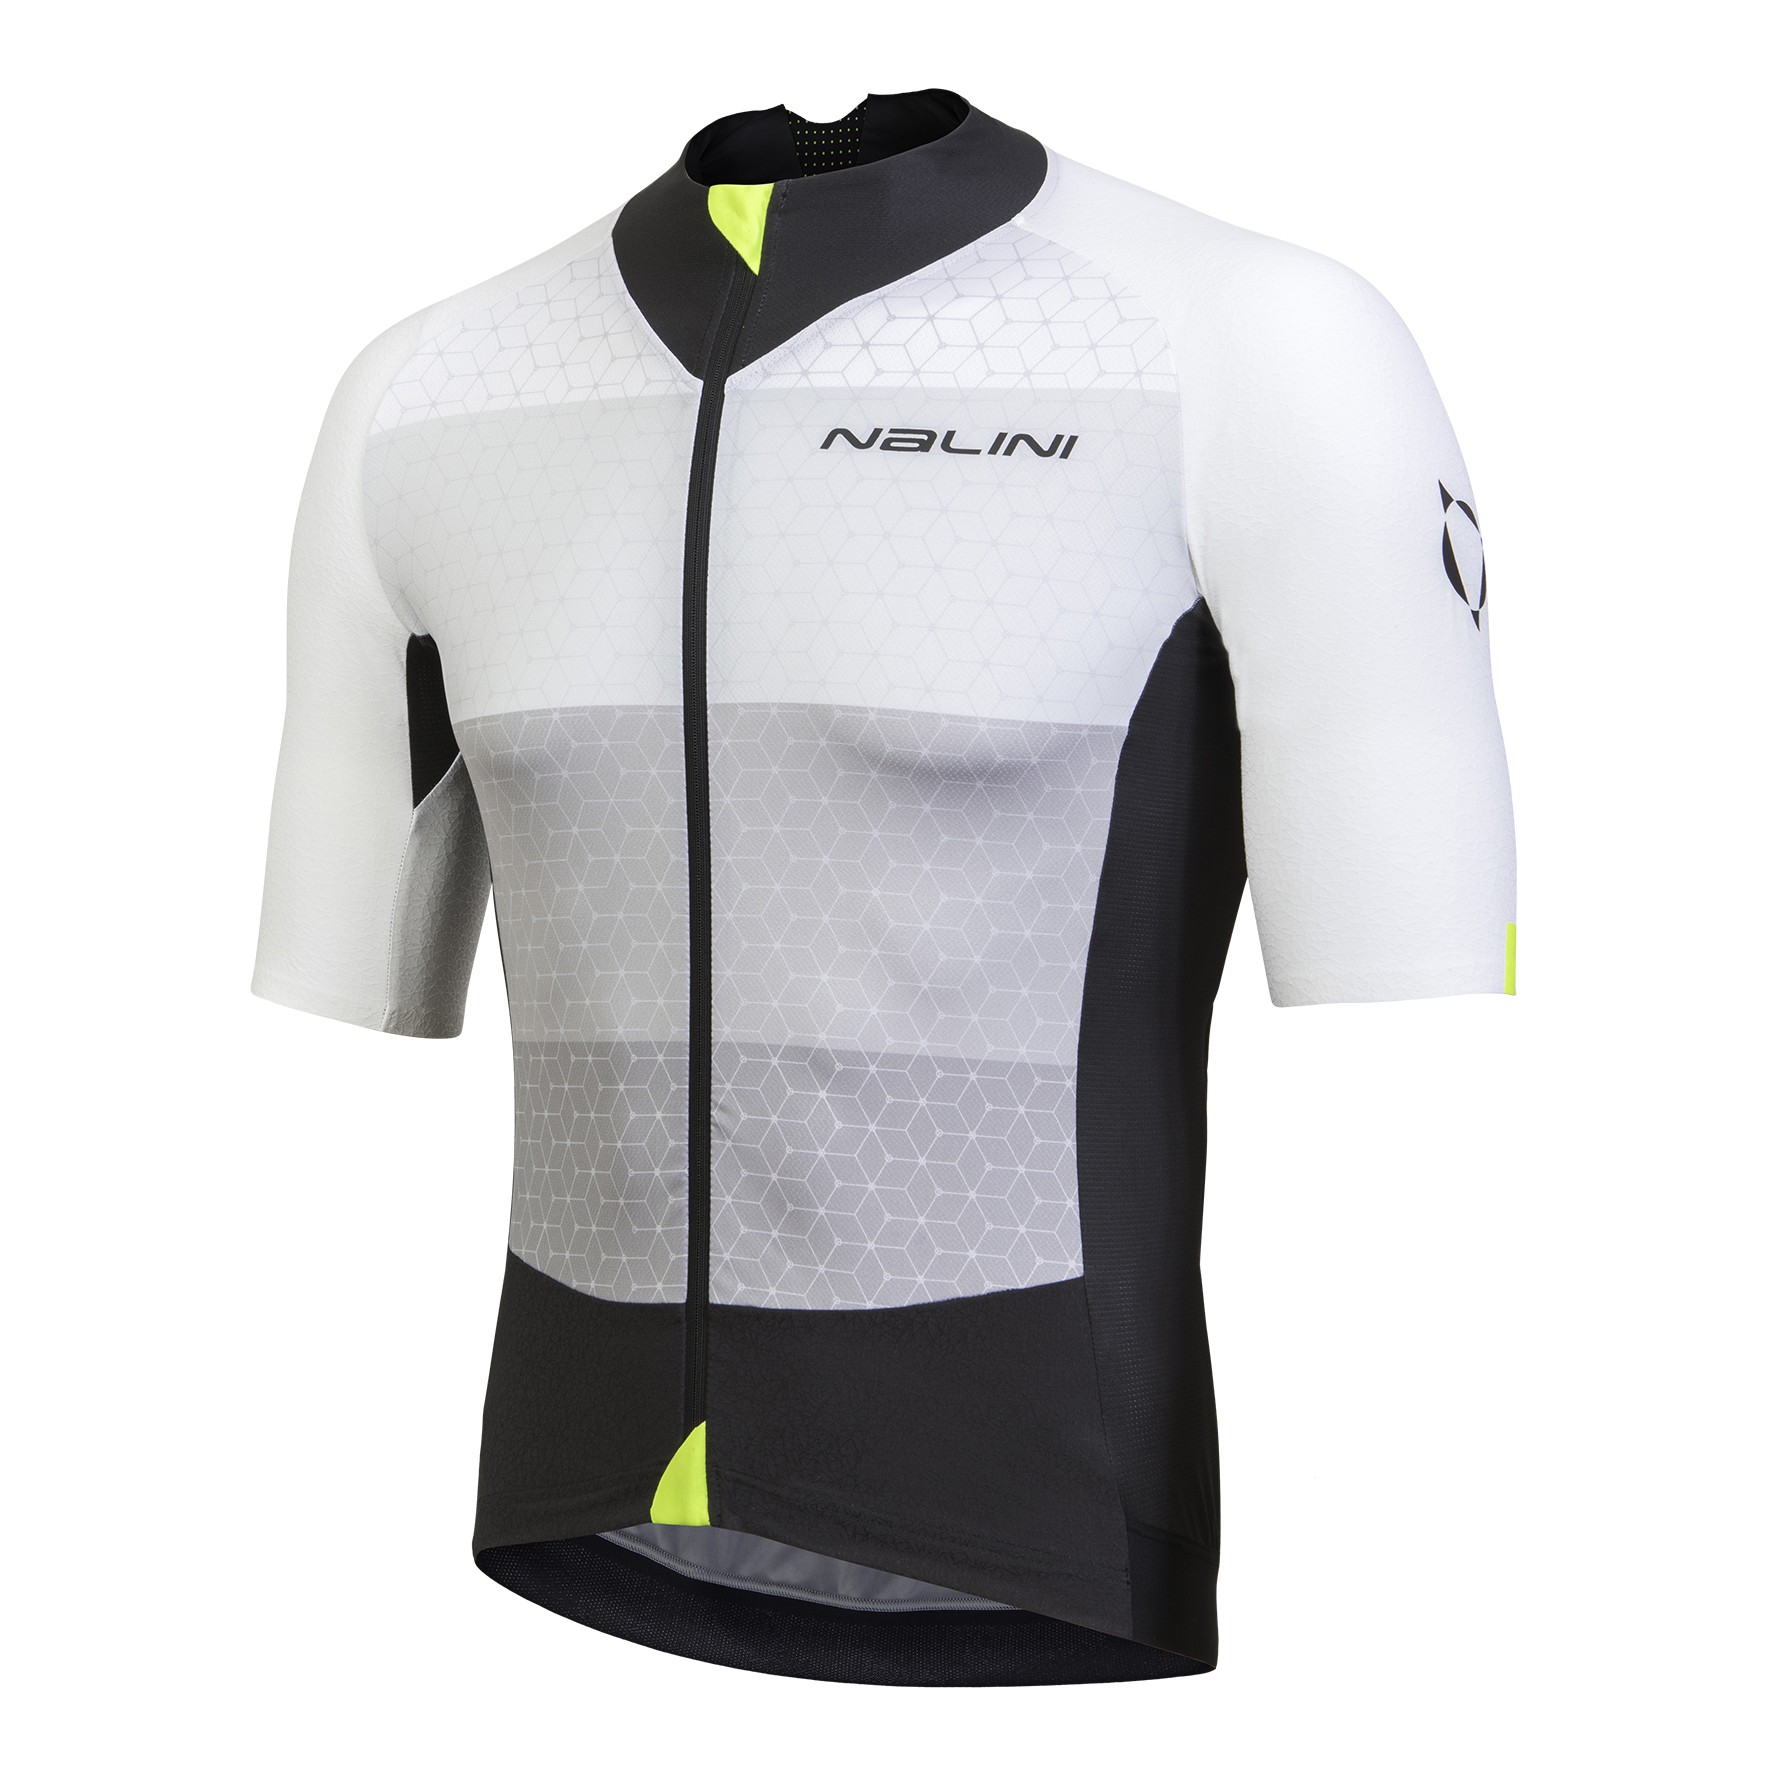 Nalini stelvio maillot de cyclisme manches courtes blanc gris noir